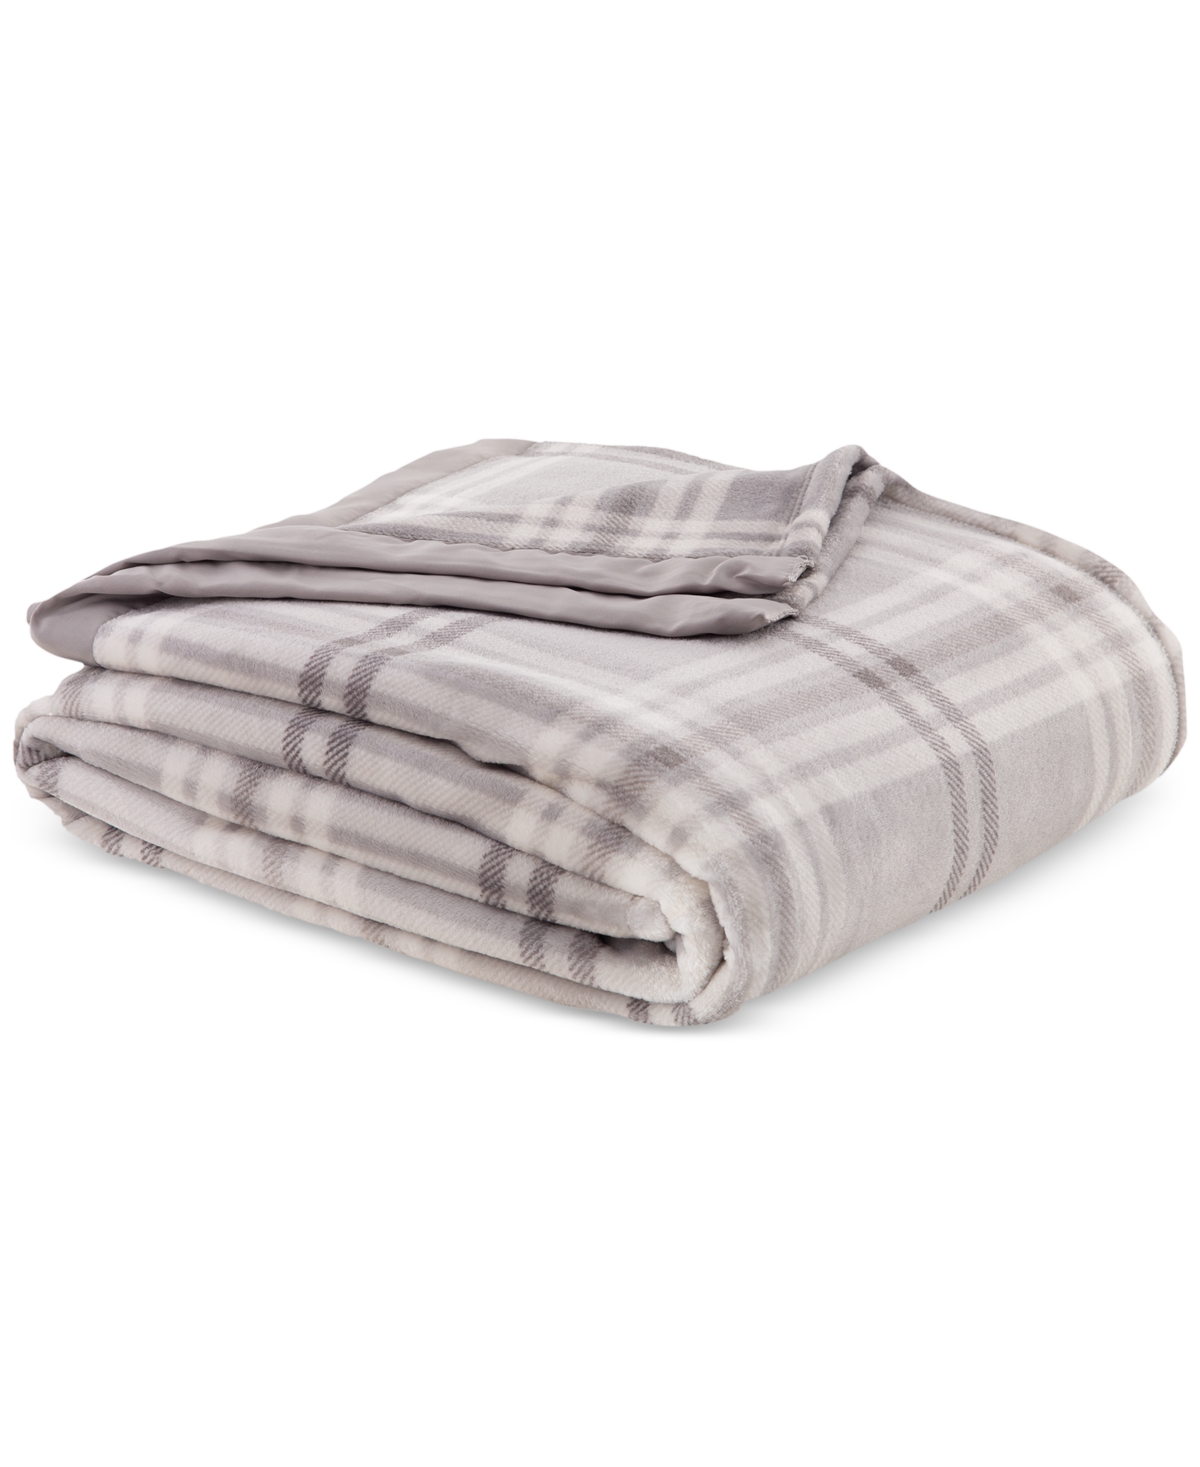 Berkshire Classic Velvety Plush Blanket, Full/queen, Created For Macy's In Grey Plaid